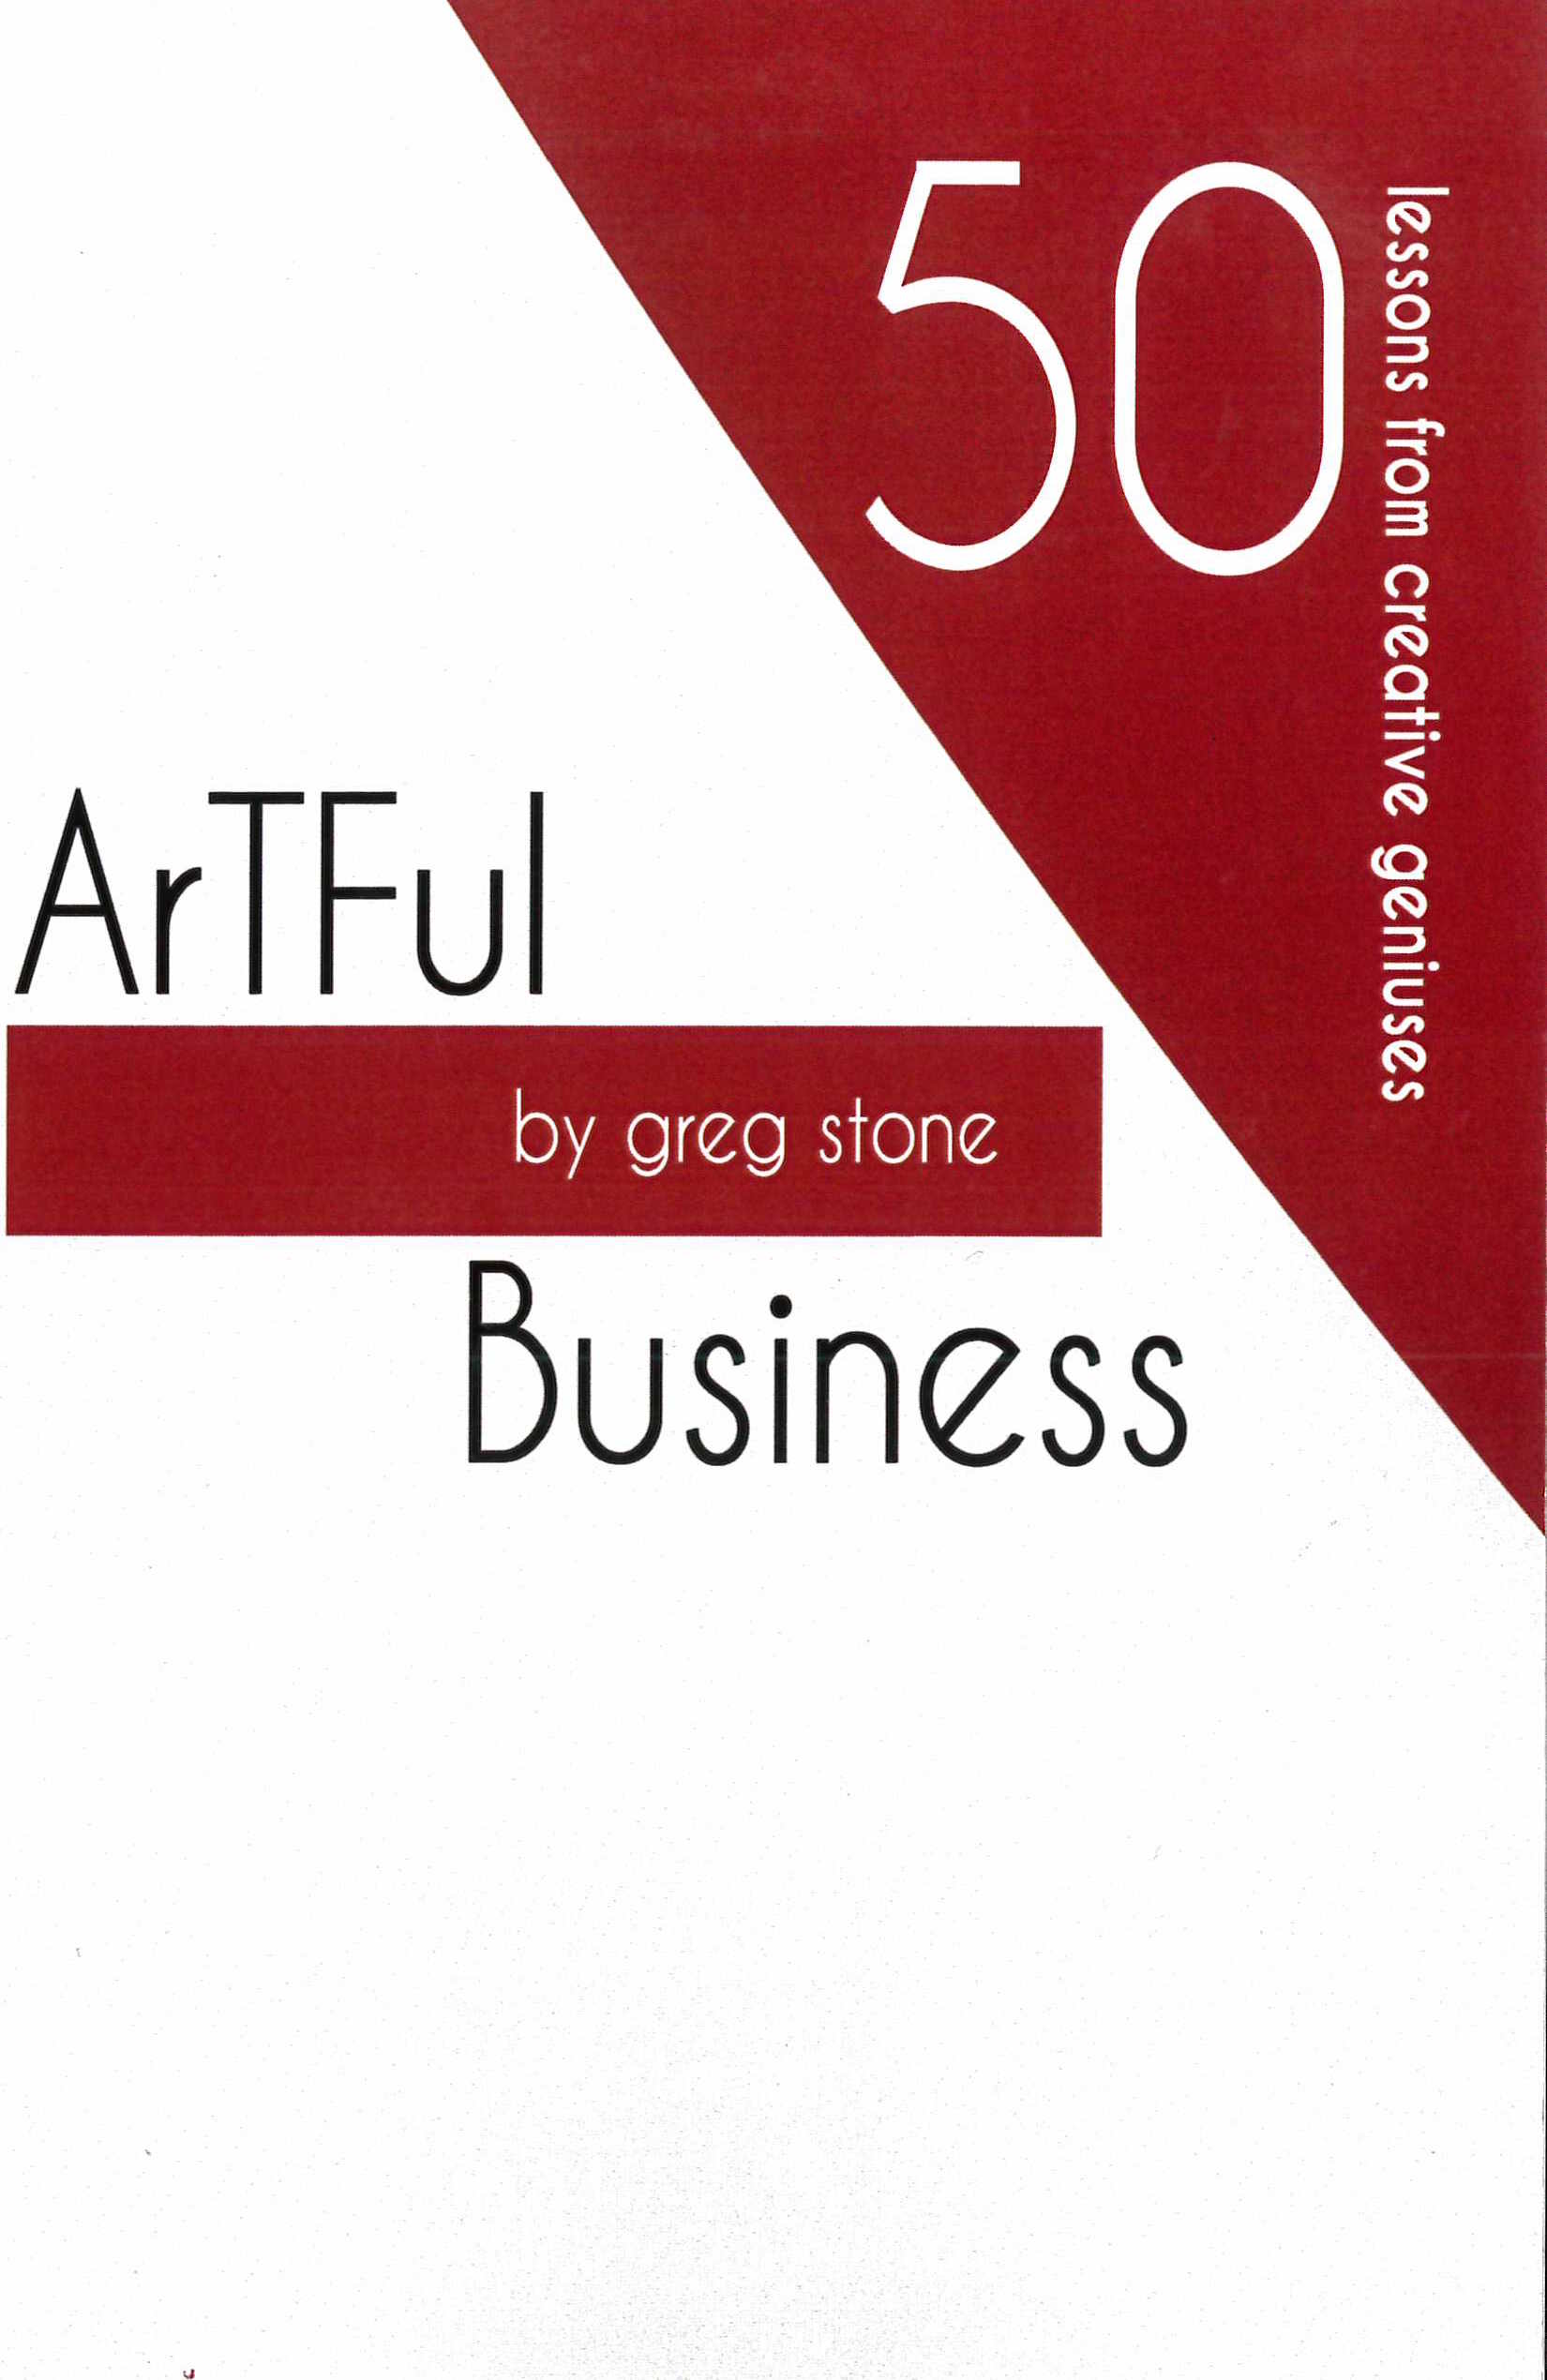 Artful Business (Copy)